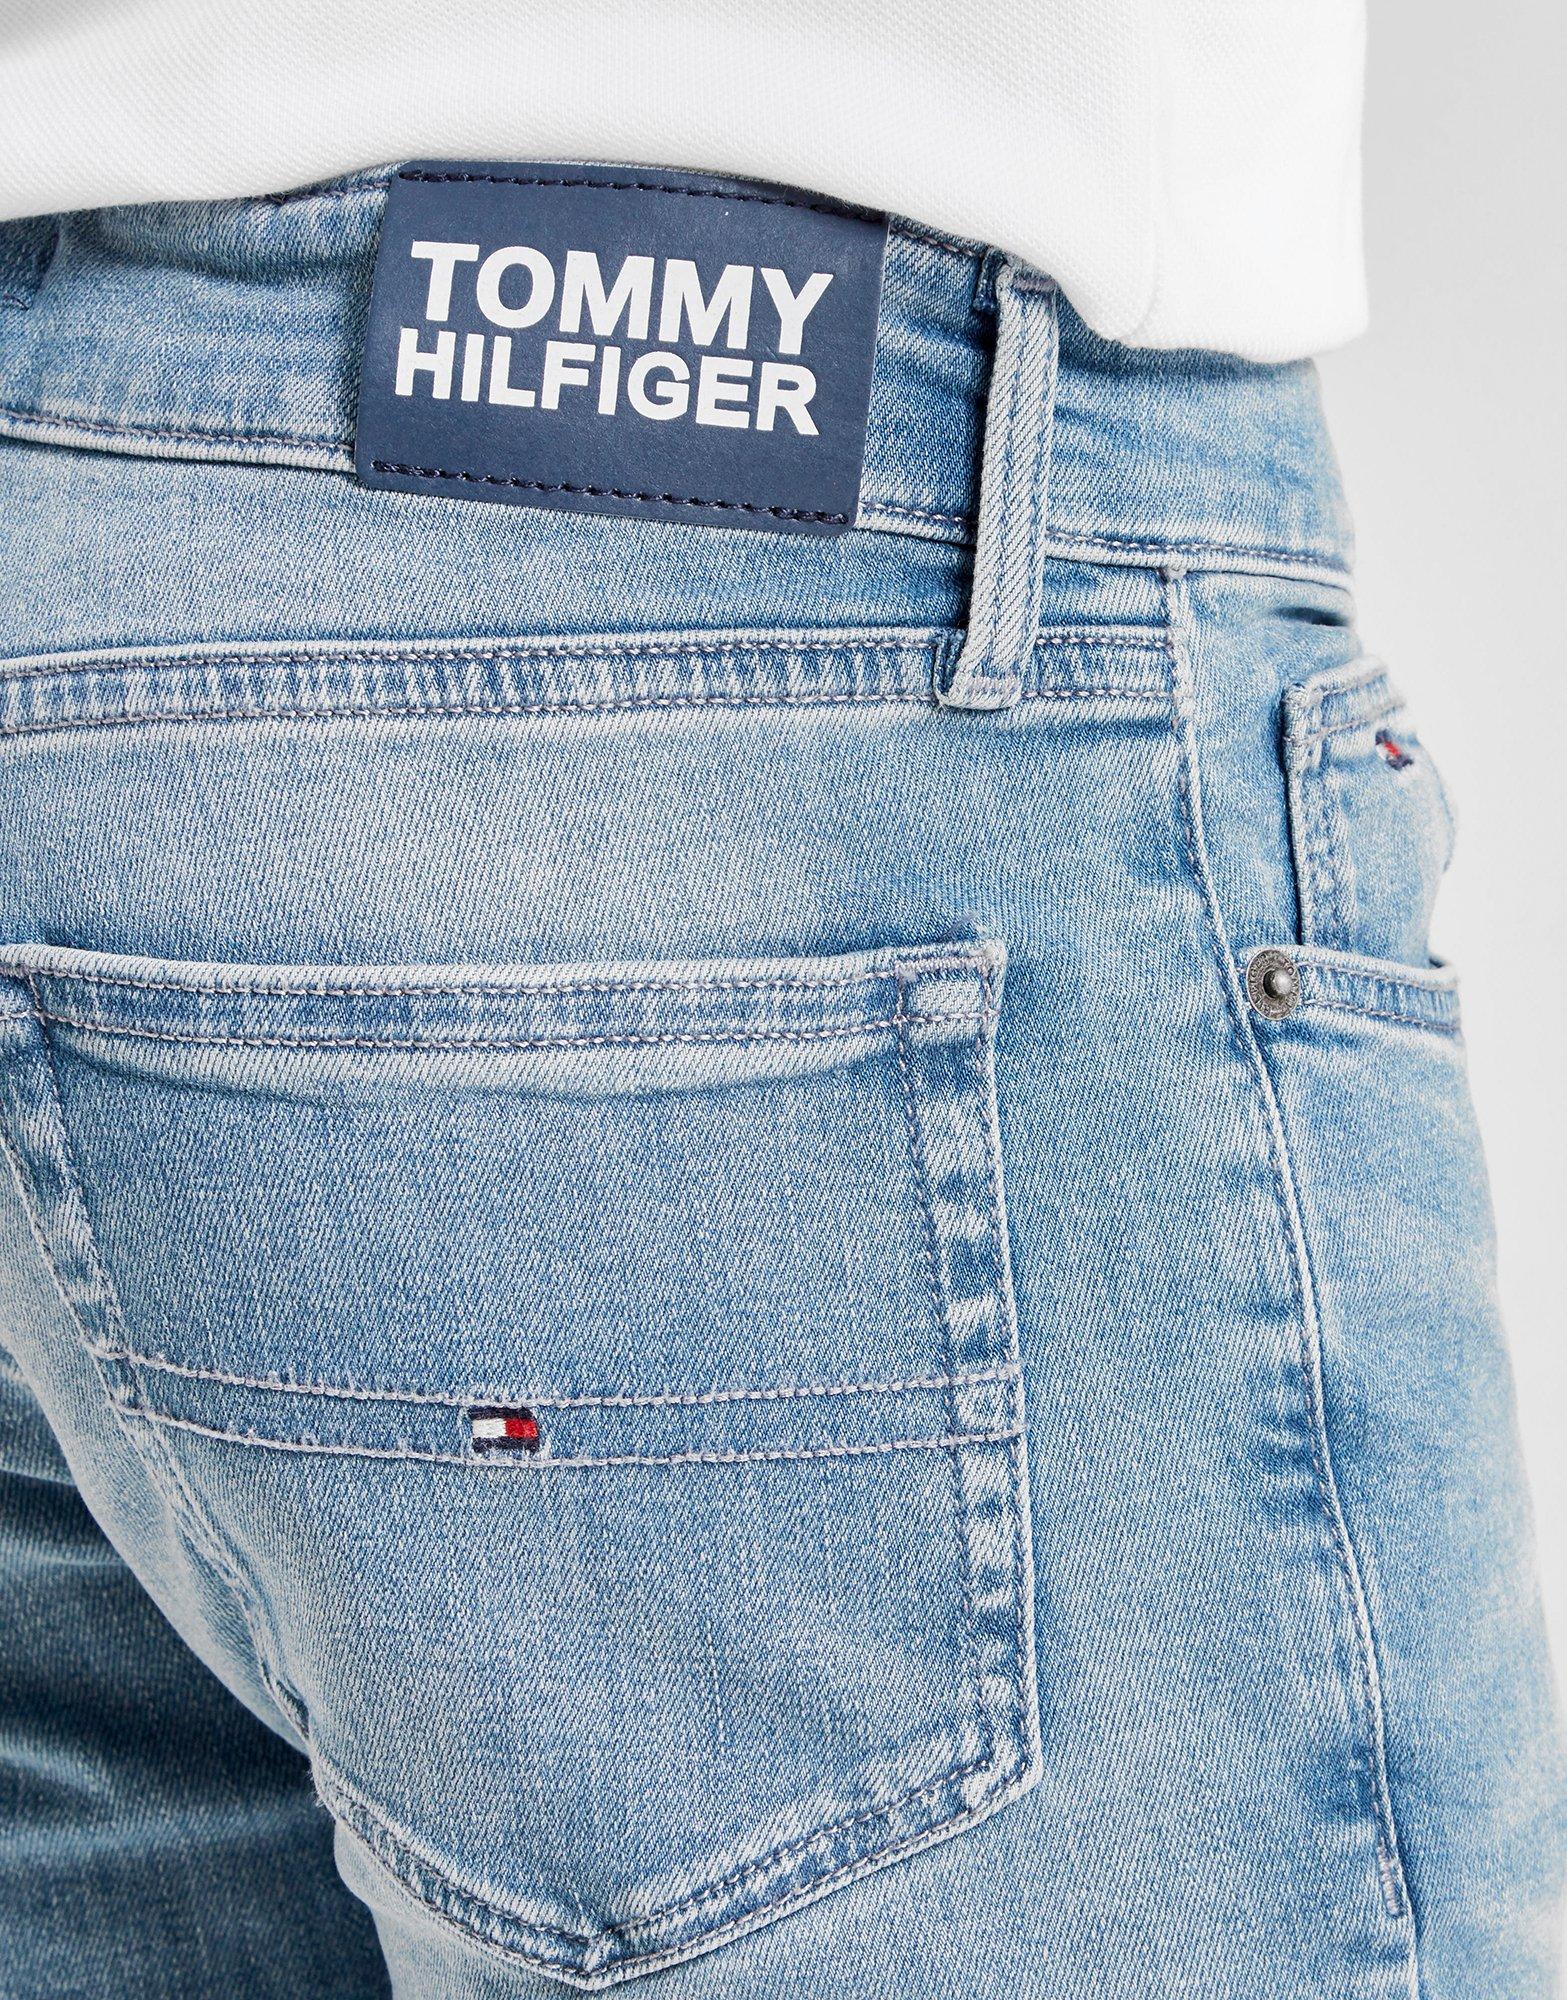 buy tommy hilfiger jeans